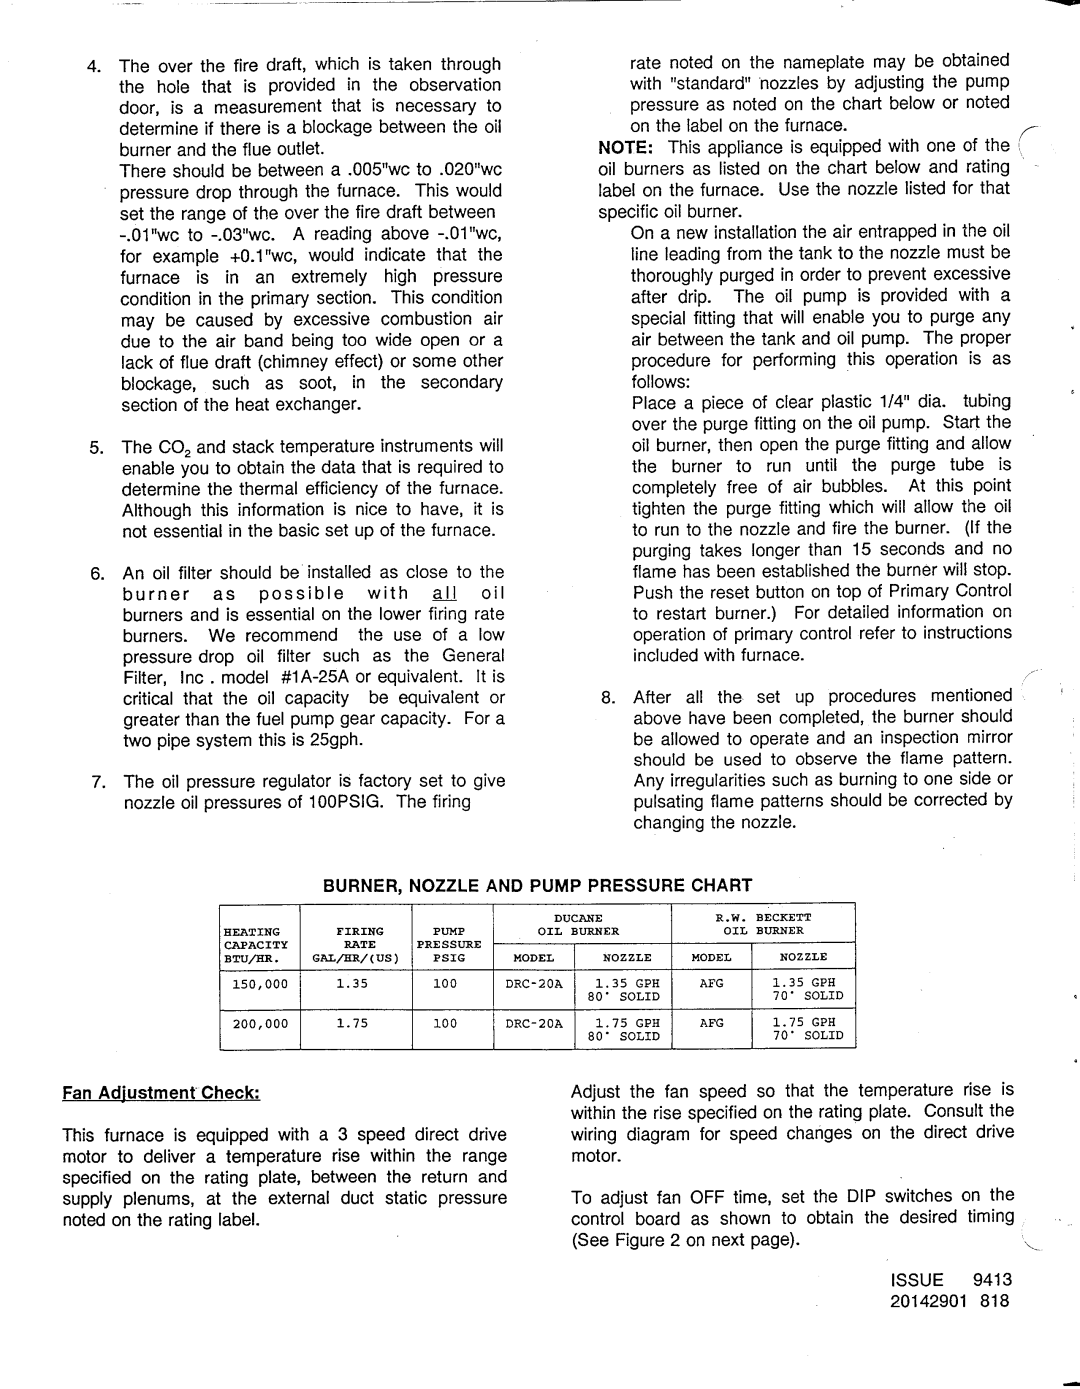 Carrier 58BTA manual 